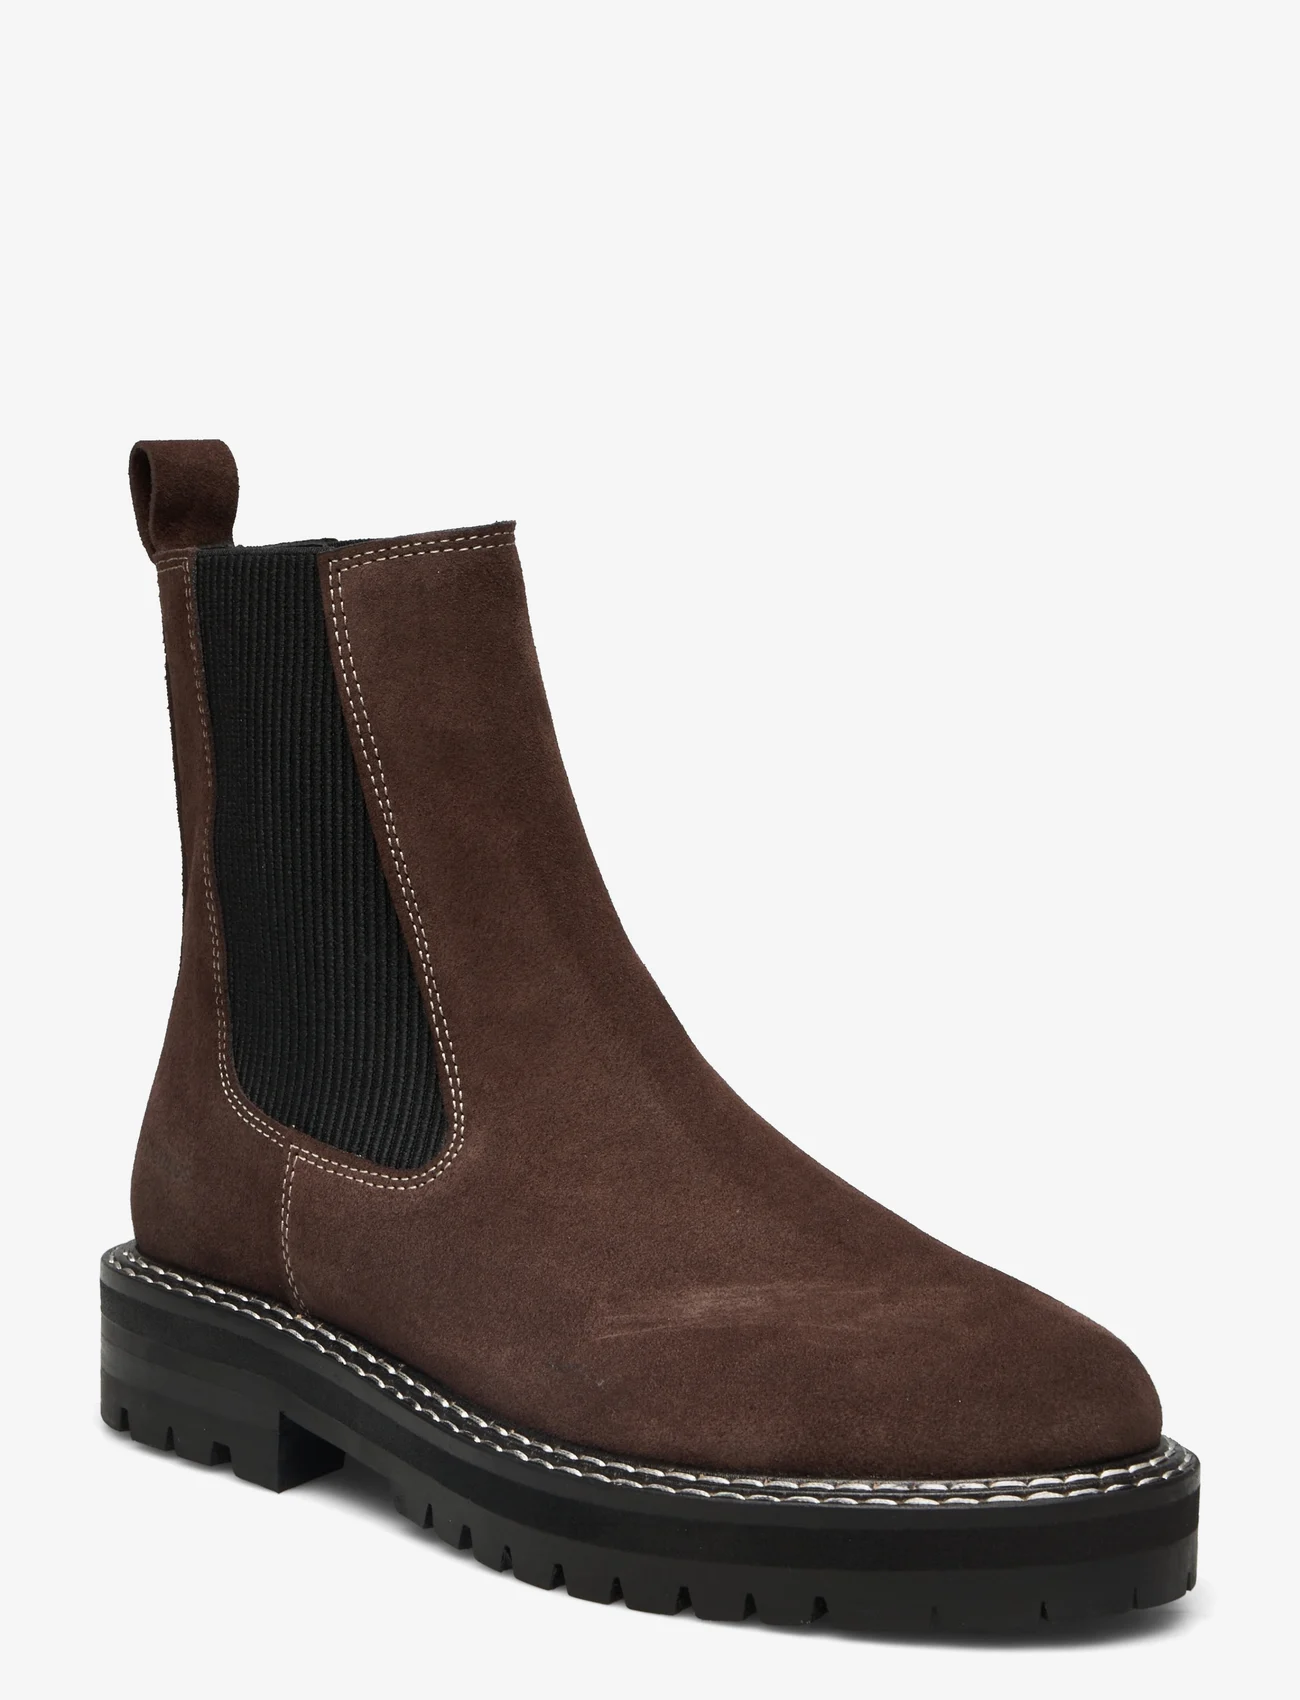 ANGULUS - Boots - flat - chelsea-saapad - 1718/019 brown/black - 0